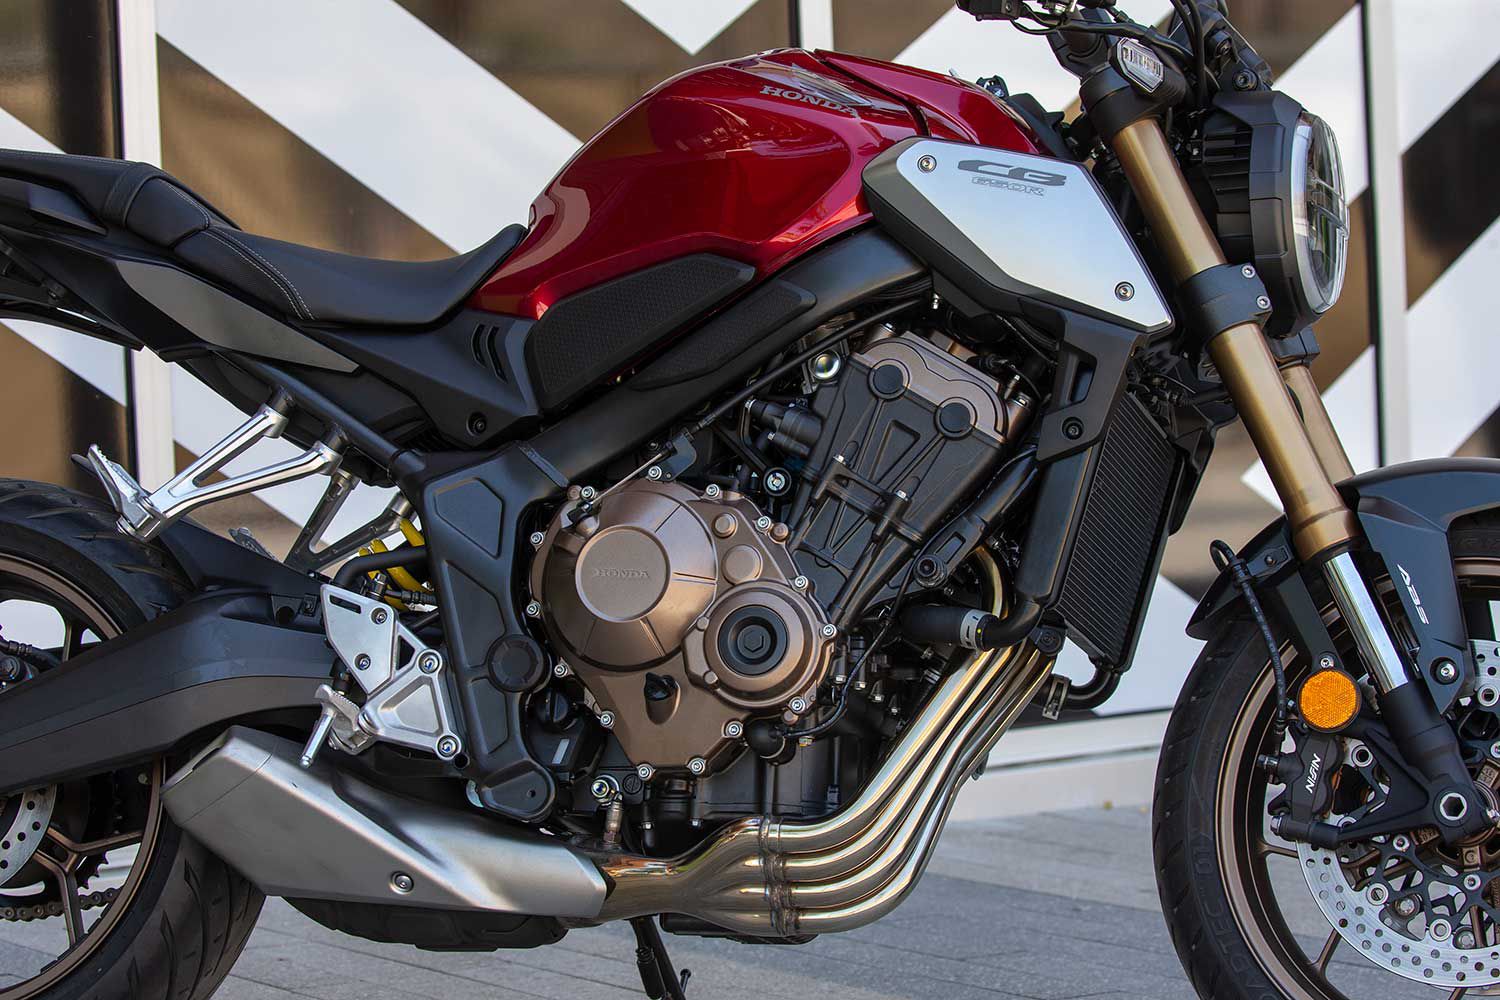 2019 Honda CB650R Review - First Ride